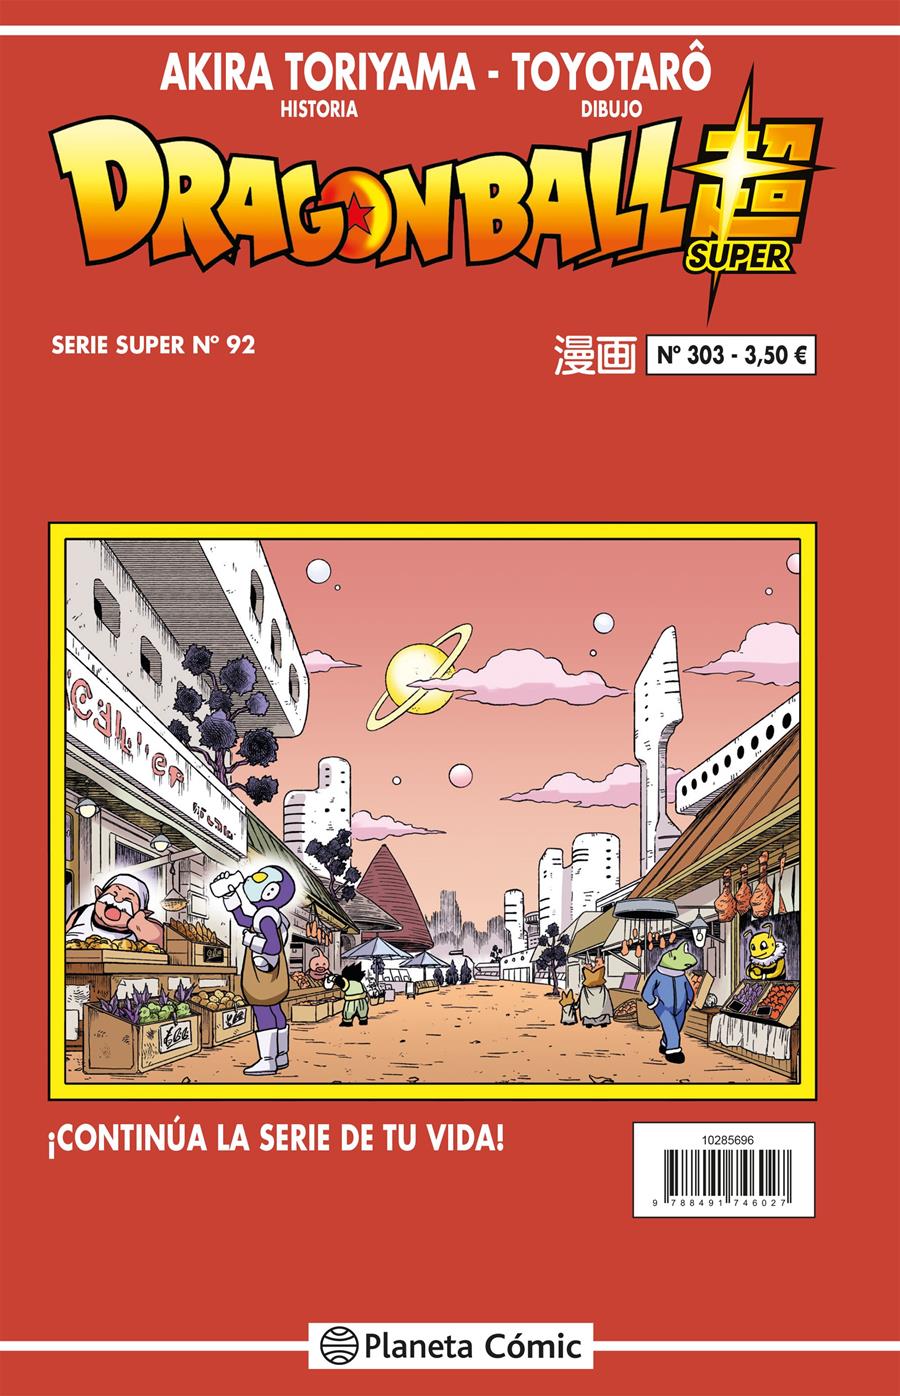 Dragon Ball Serie Roja nº 303 | N0223-PLA24 | Akira Toriyama | Terra de Còmic - Tu tienda de cómics online especializada en cómics, manga y merchandising